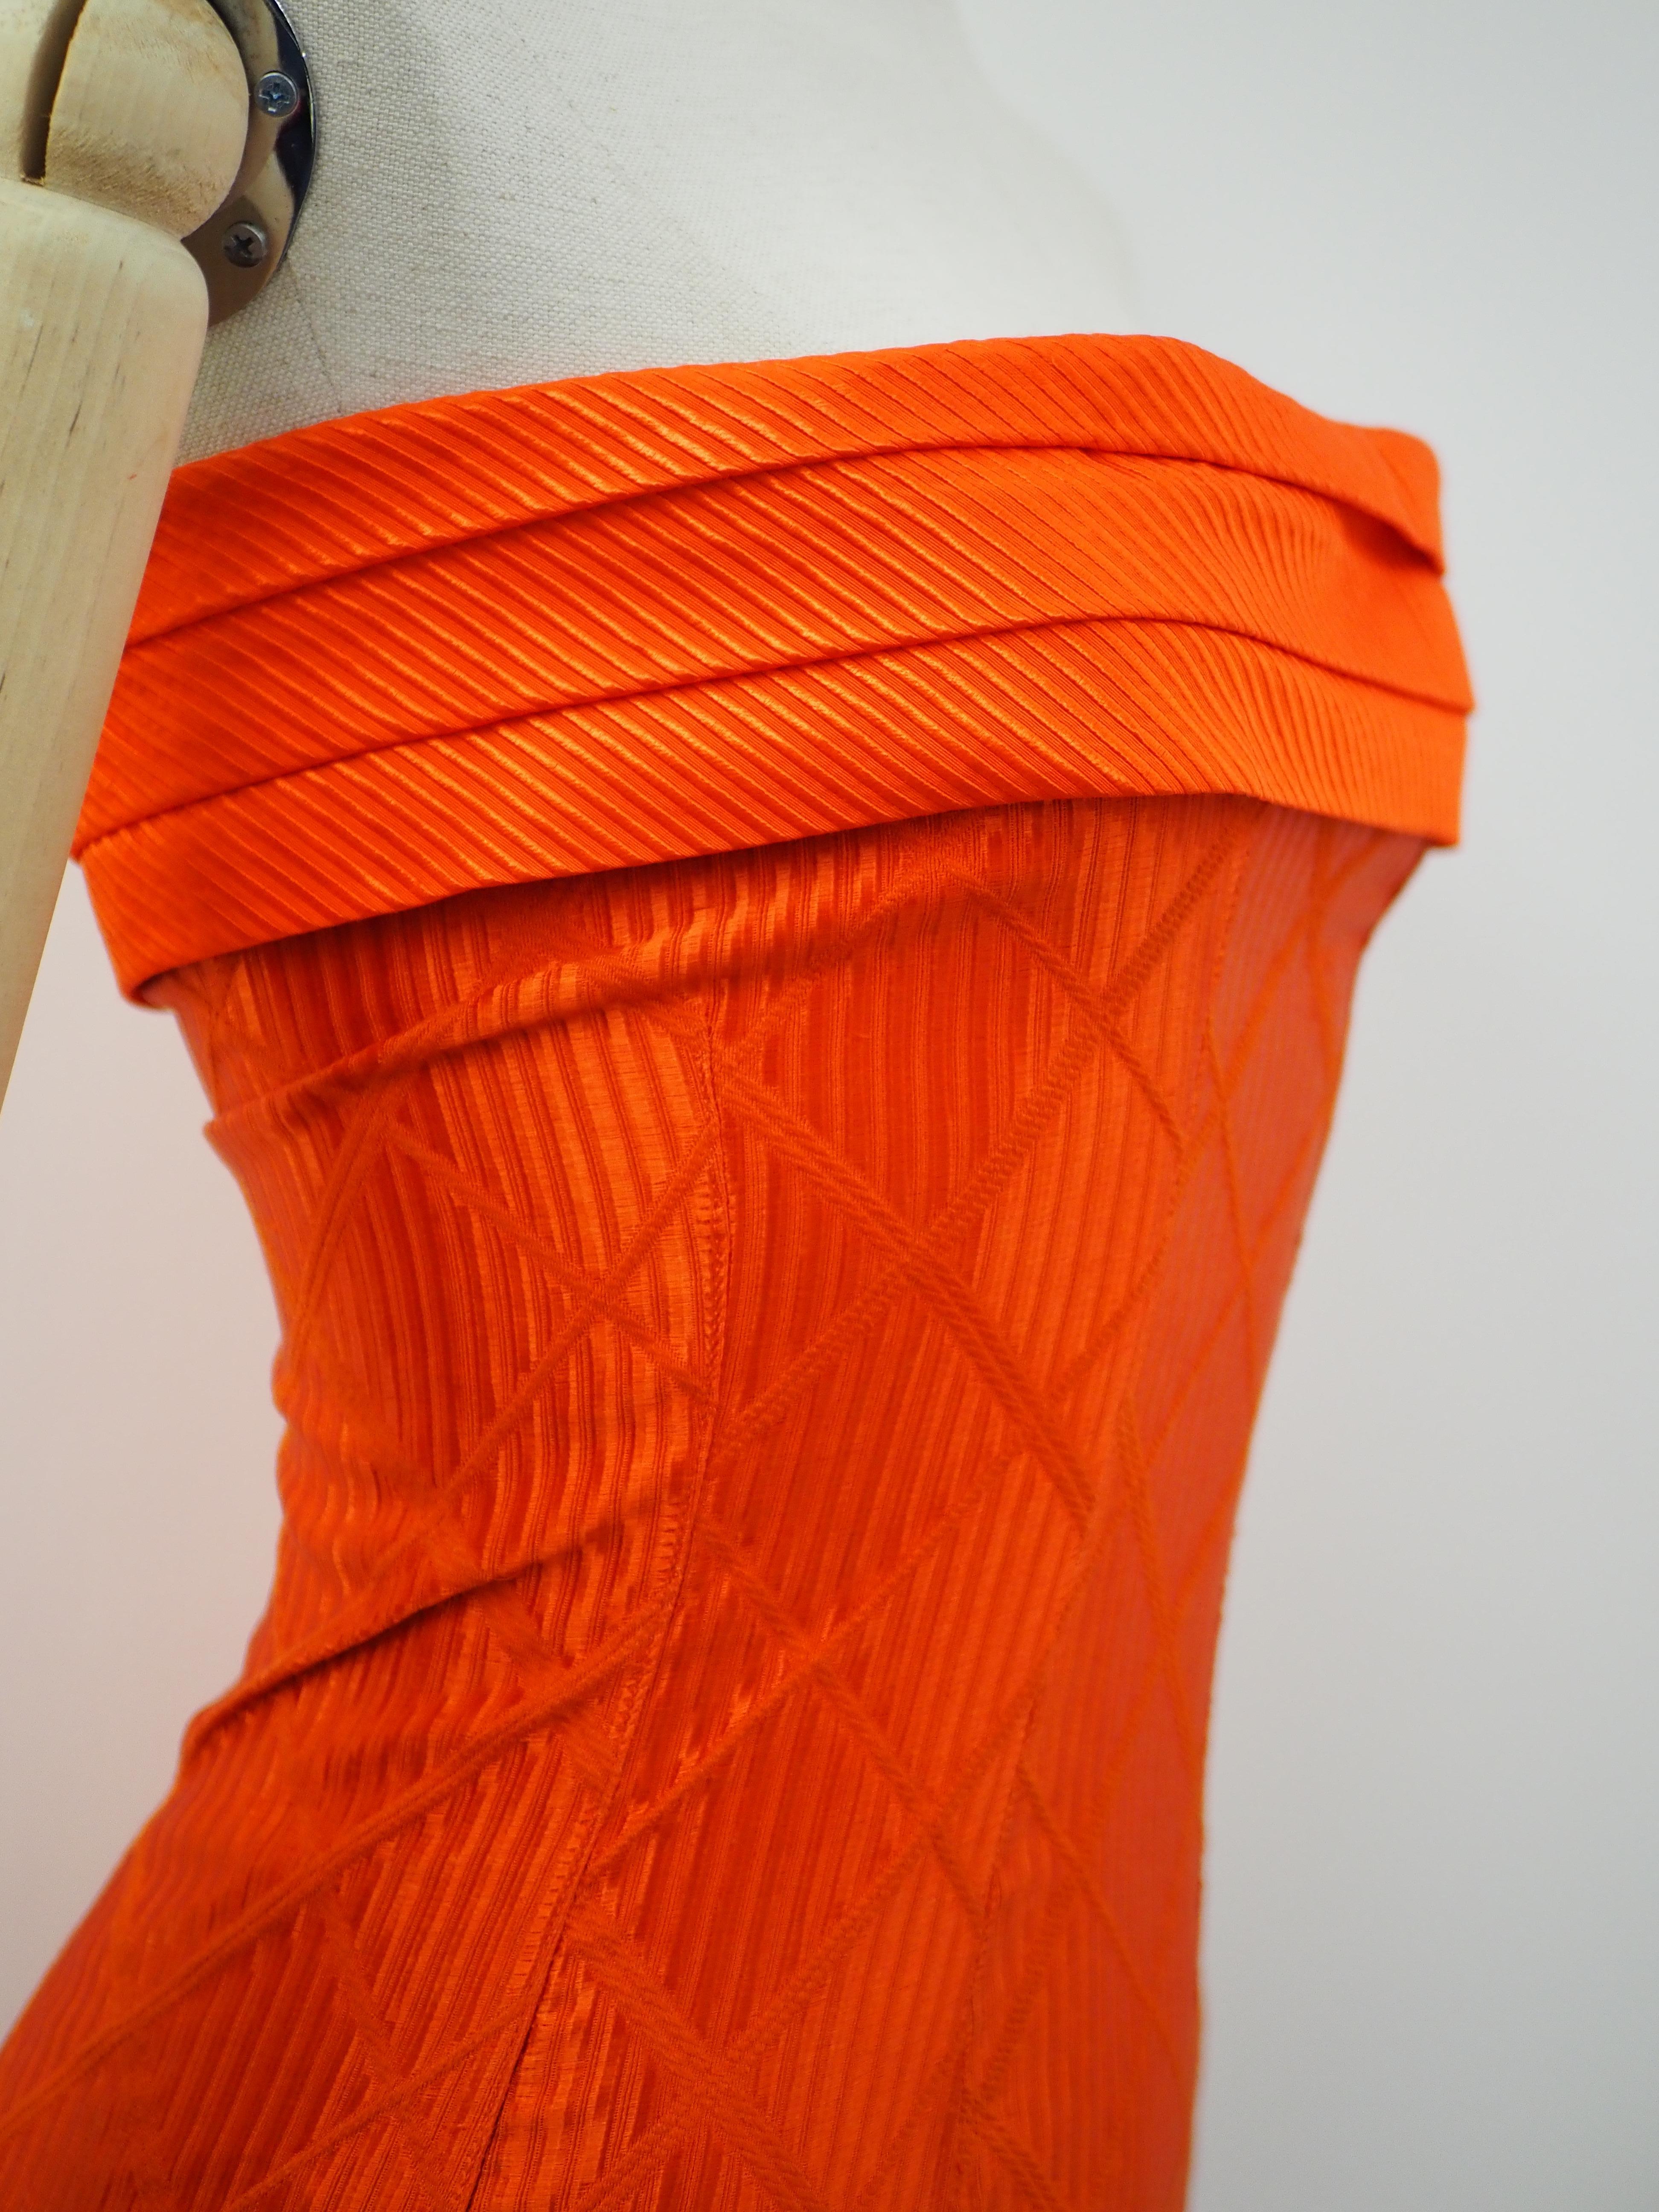 Women's Versus by Gianni Versace orange dress